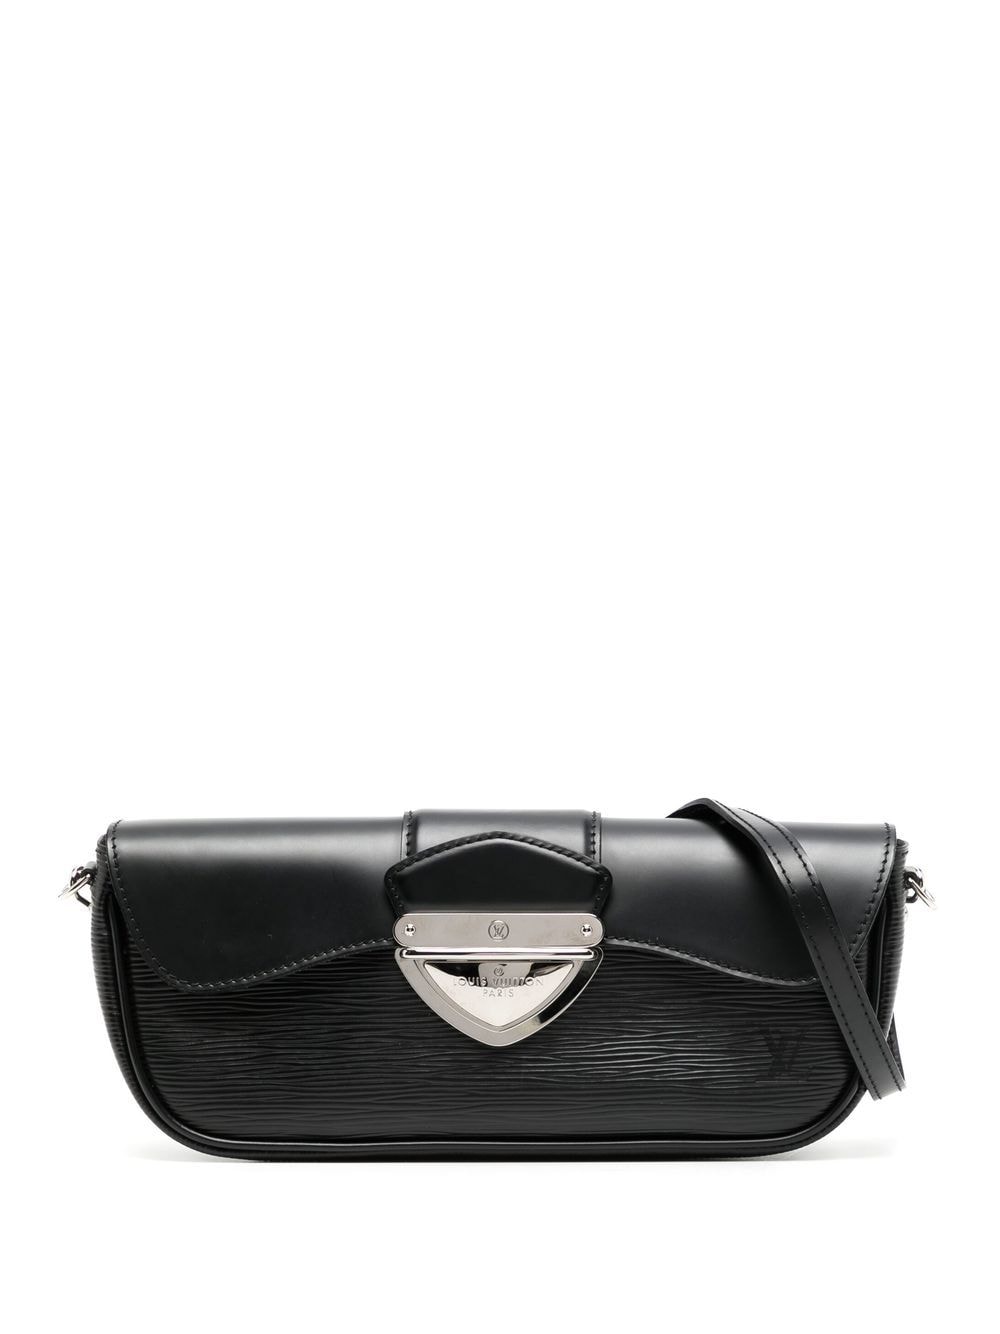 Louis Vuitton 2012 pre-owned Petillante Clutch Bag - Farfetch